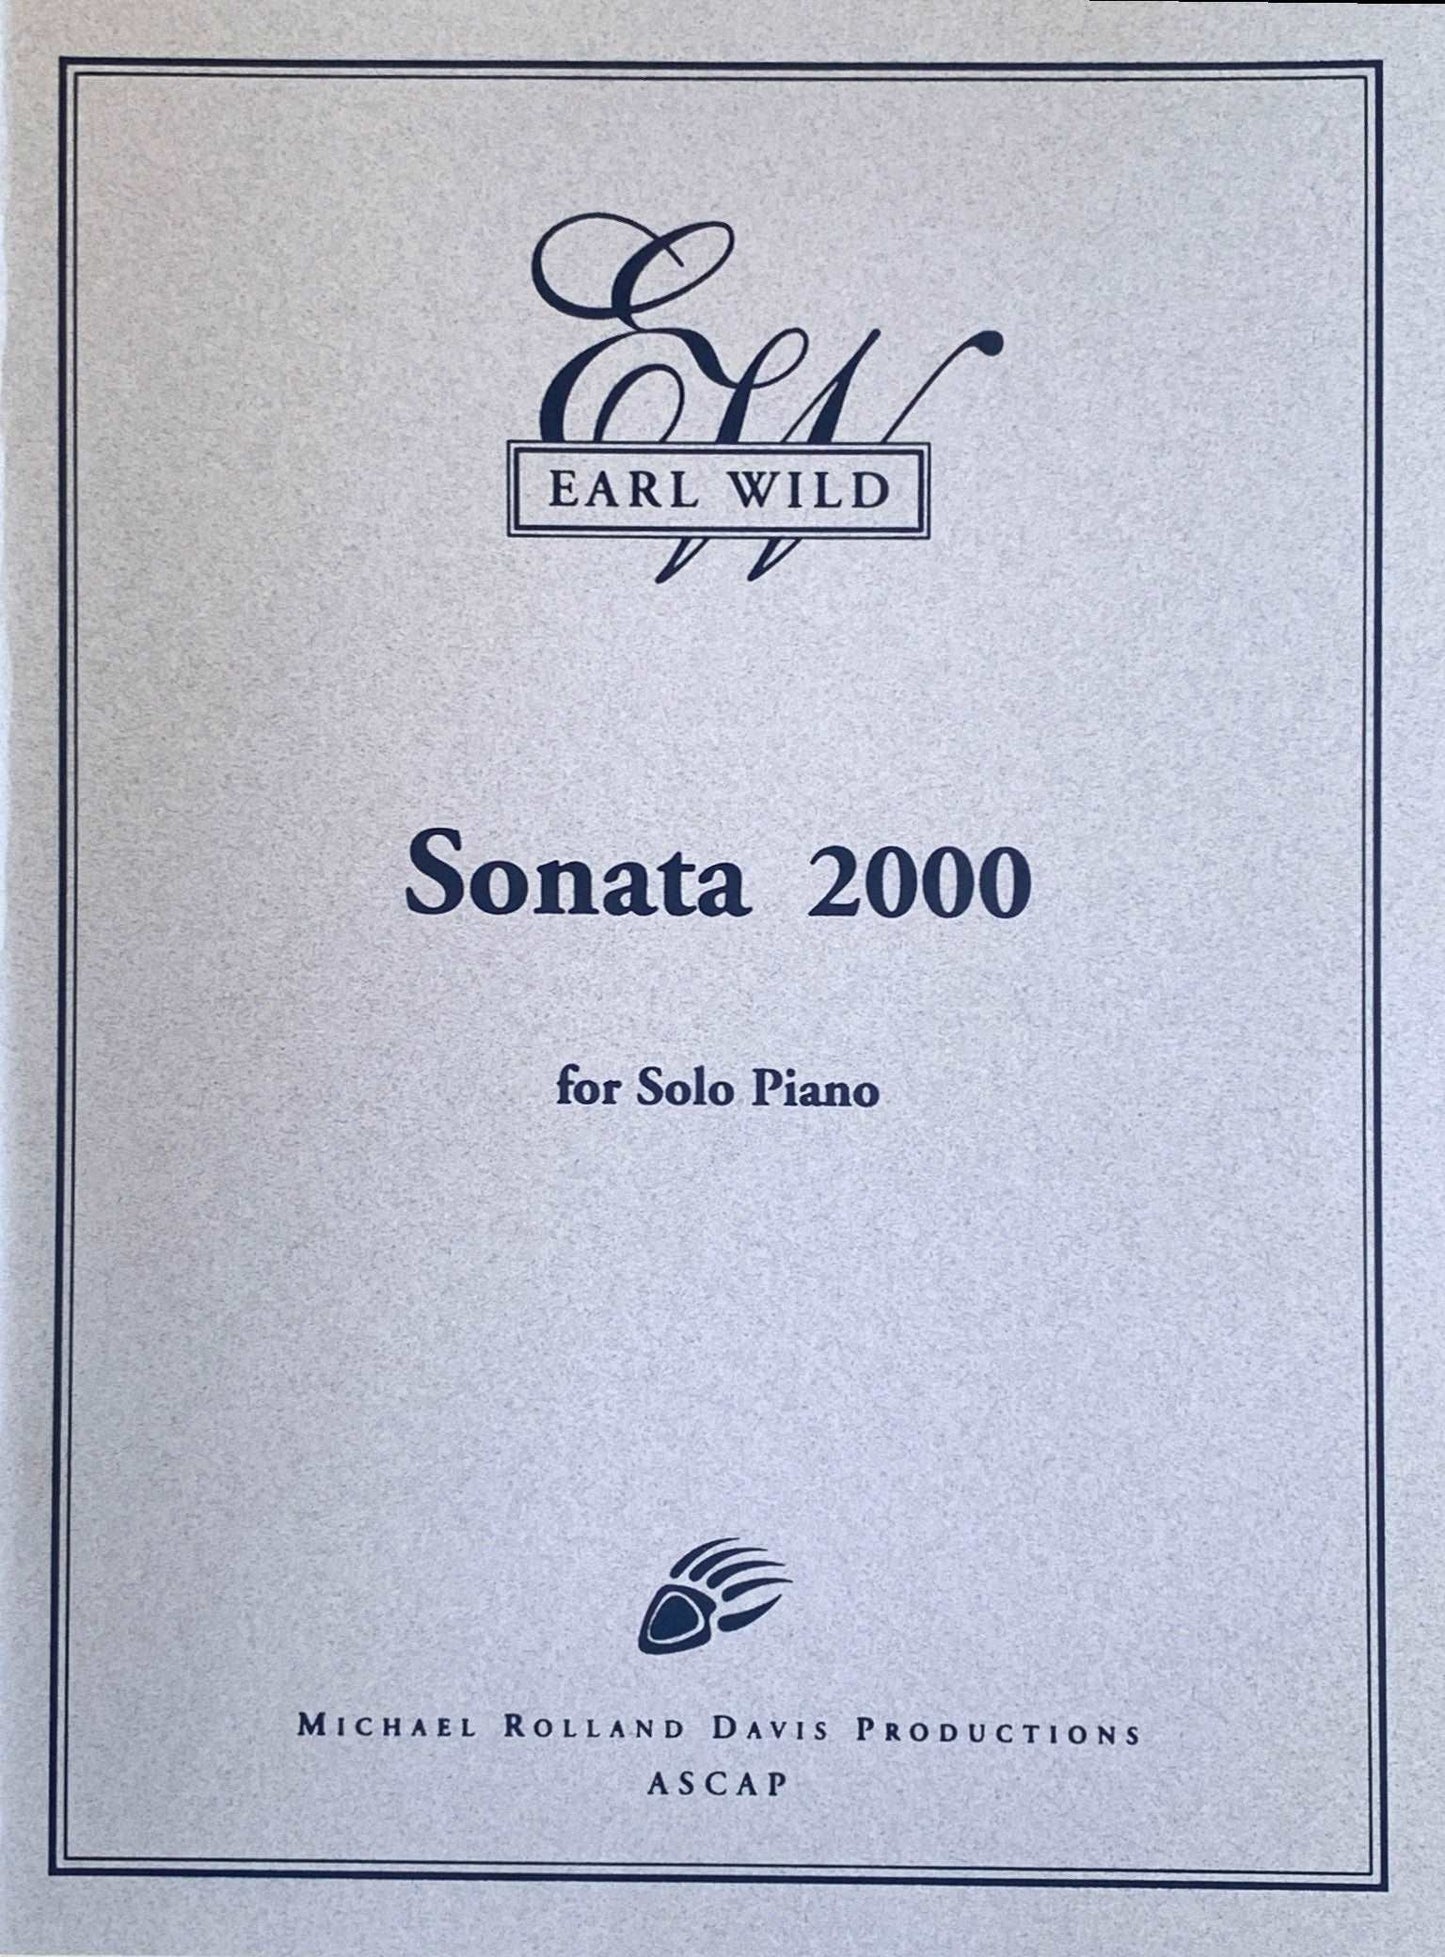 Earl Wild: ‘Piano Sonata 2000’